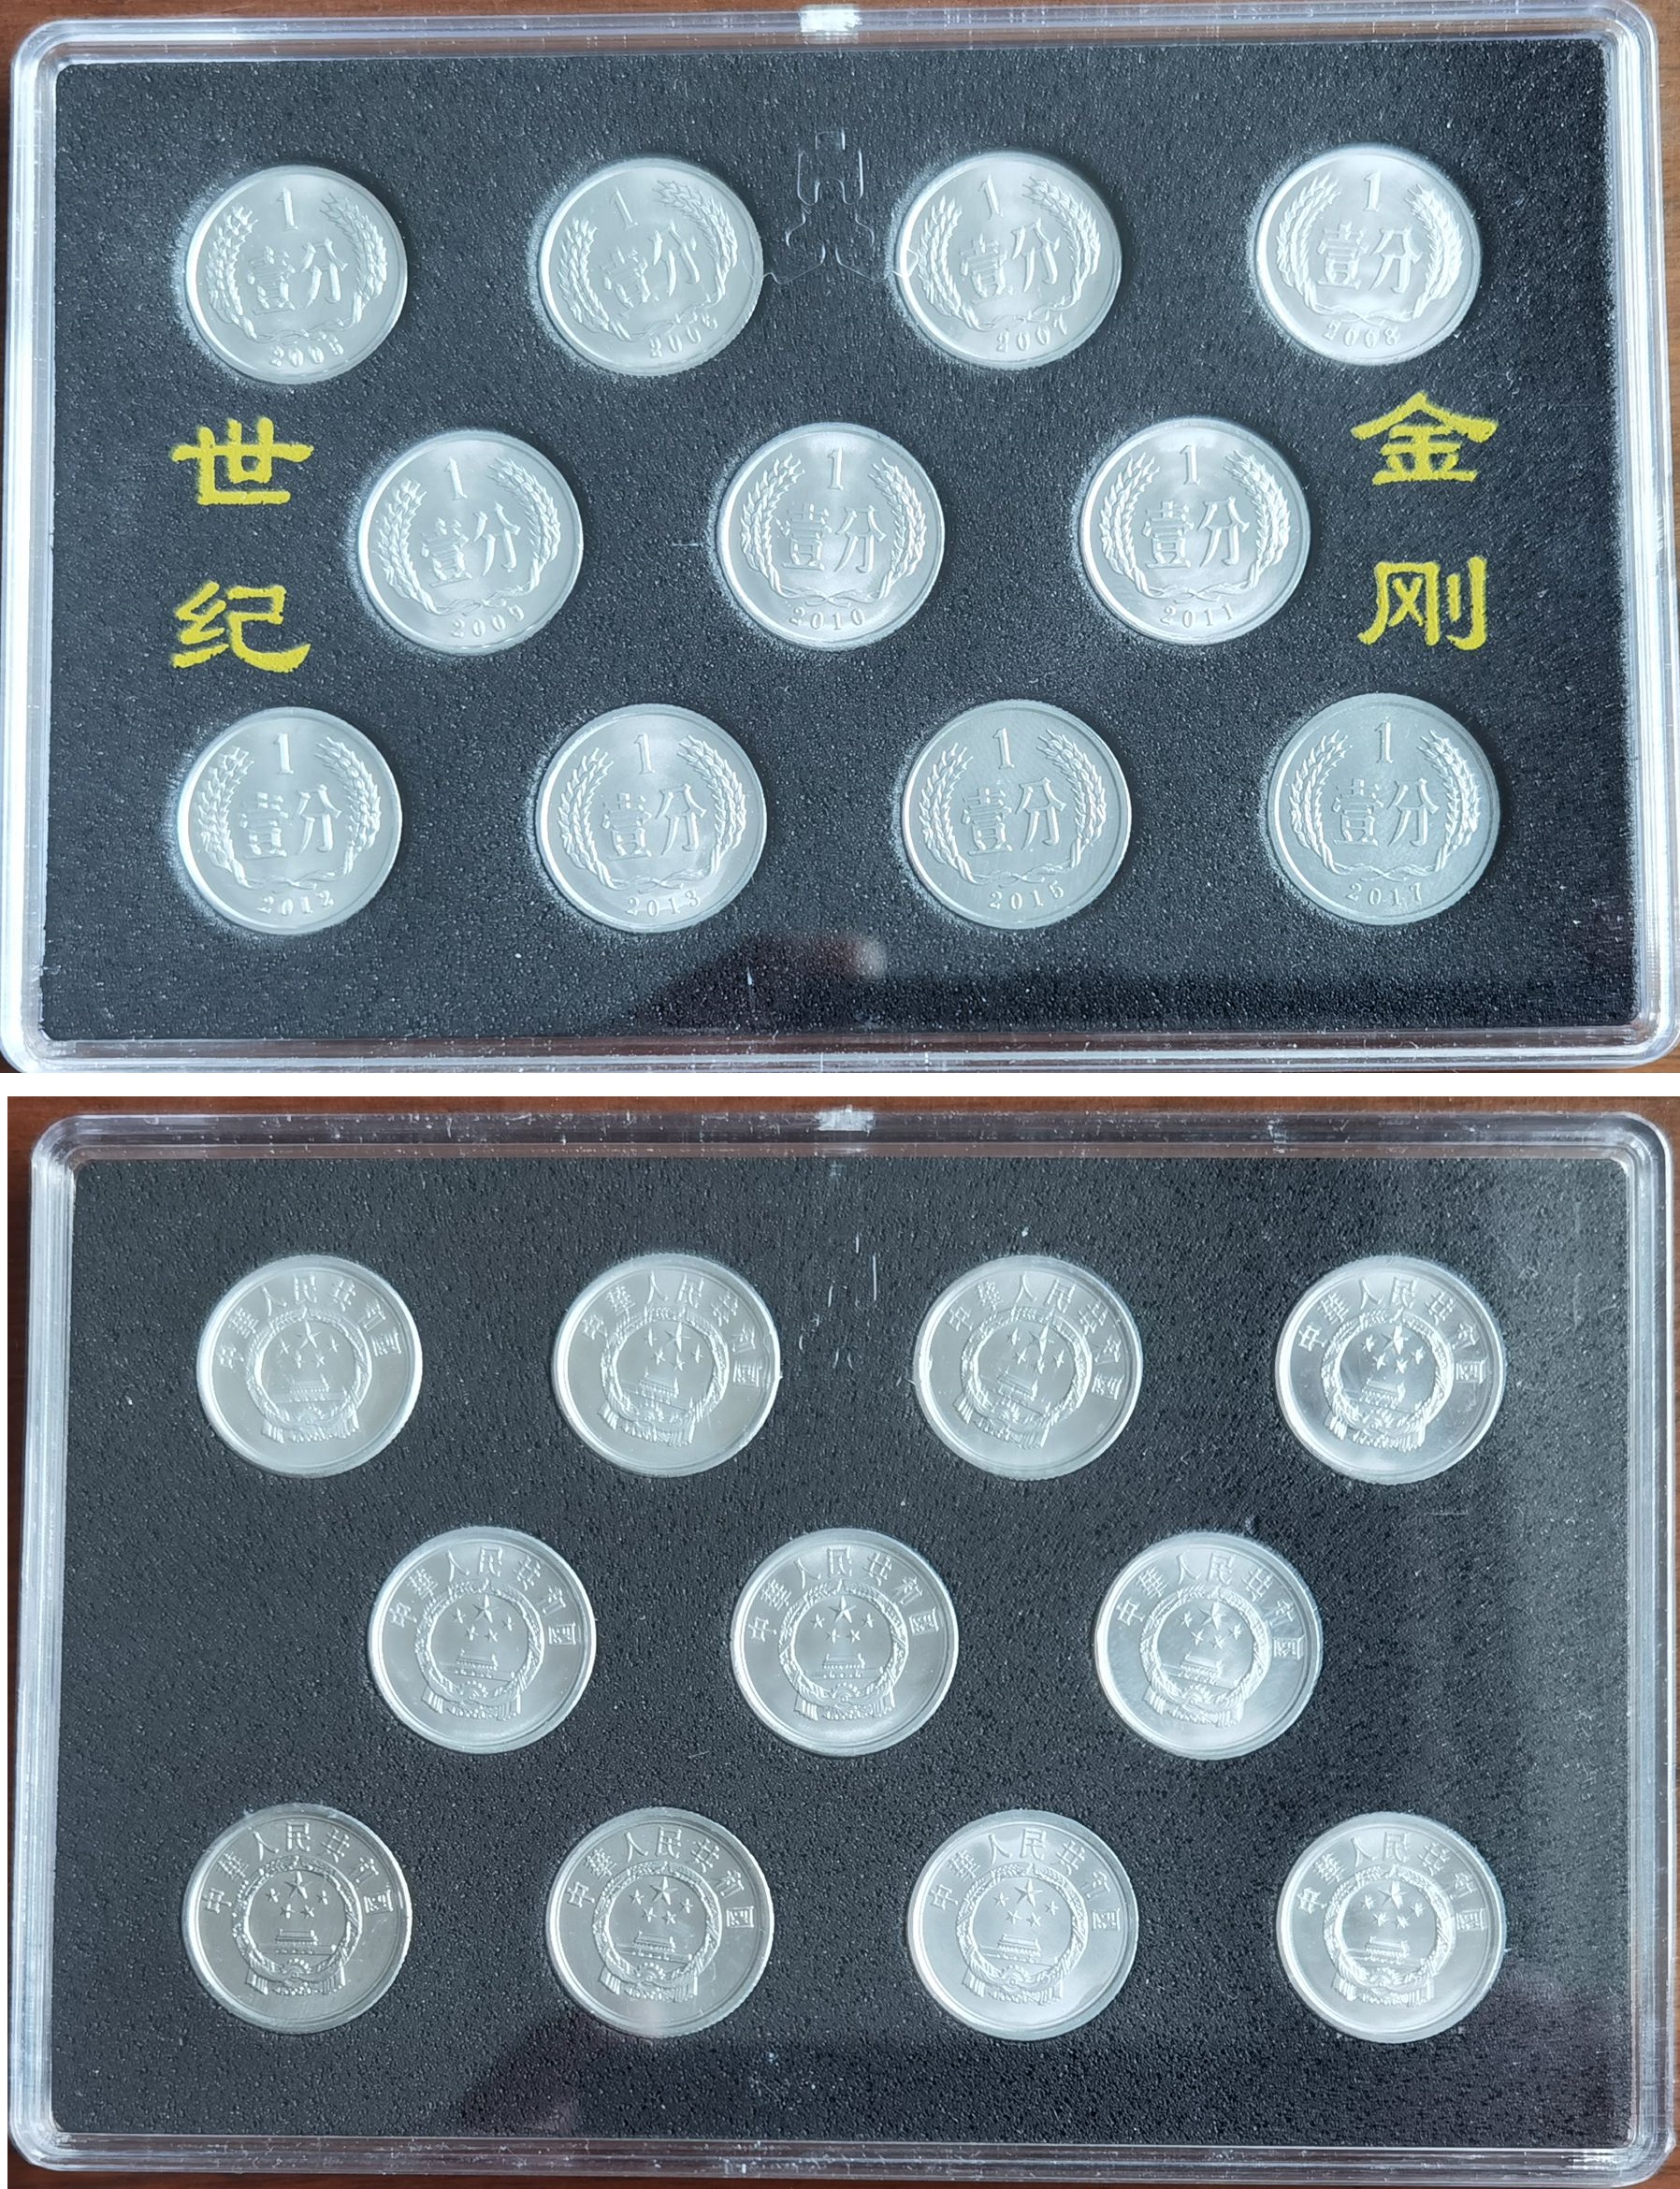 K7350, China 2005-2017 Mint 1 Fen Coins, 11 Pcs with Box